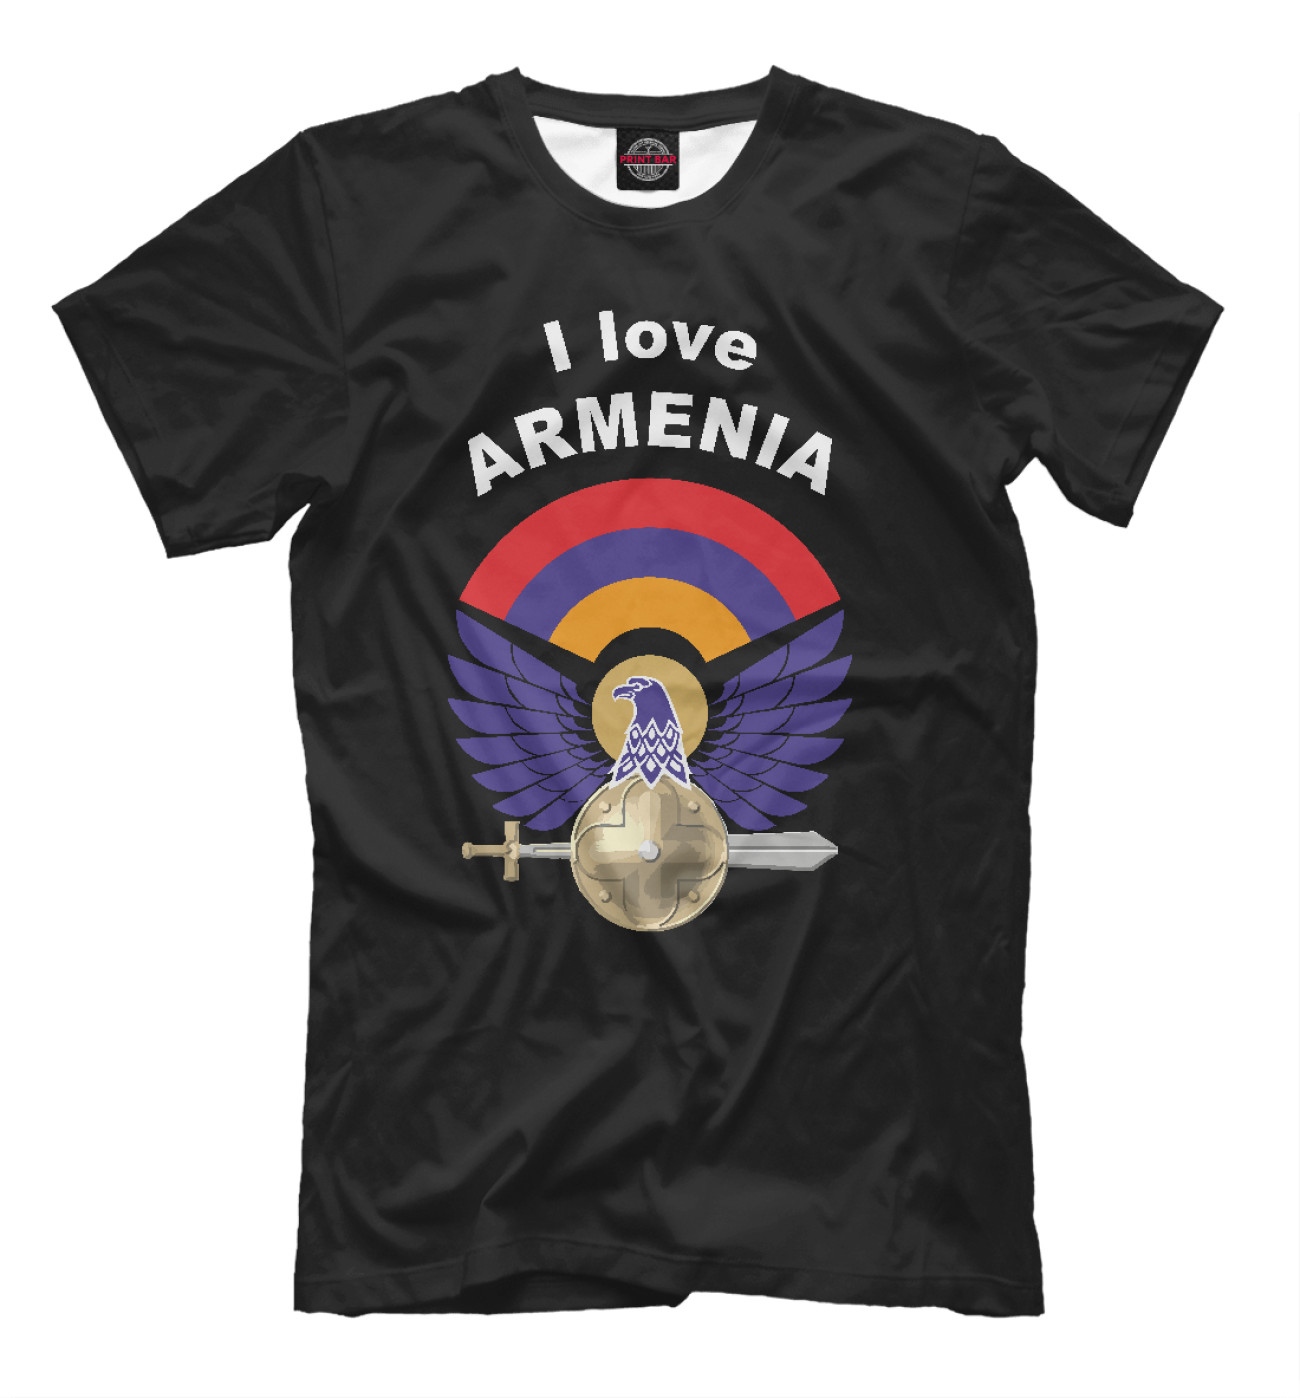 Мужская Футболка Armenia, артикул: AMN-640168-fut-2